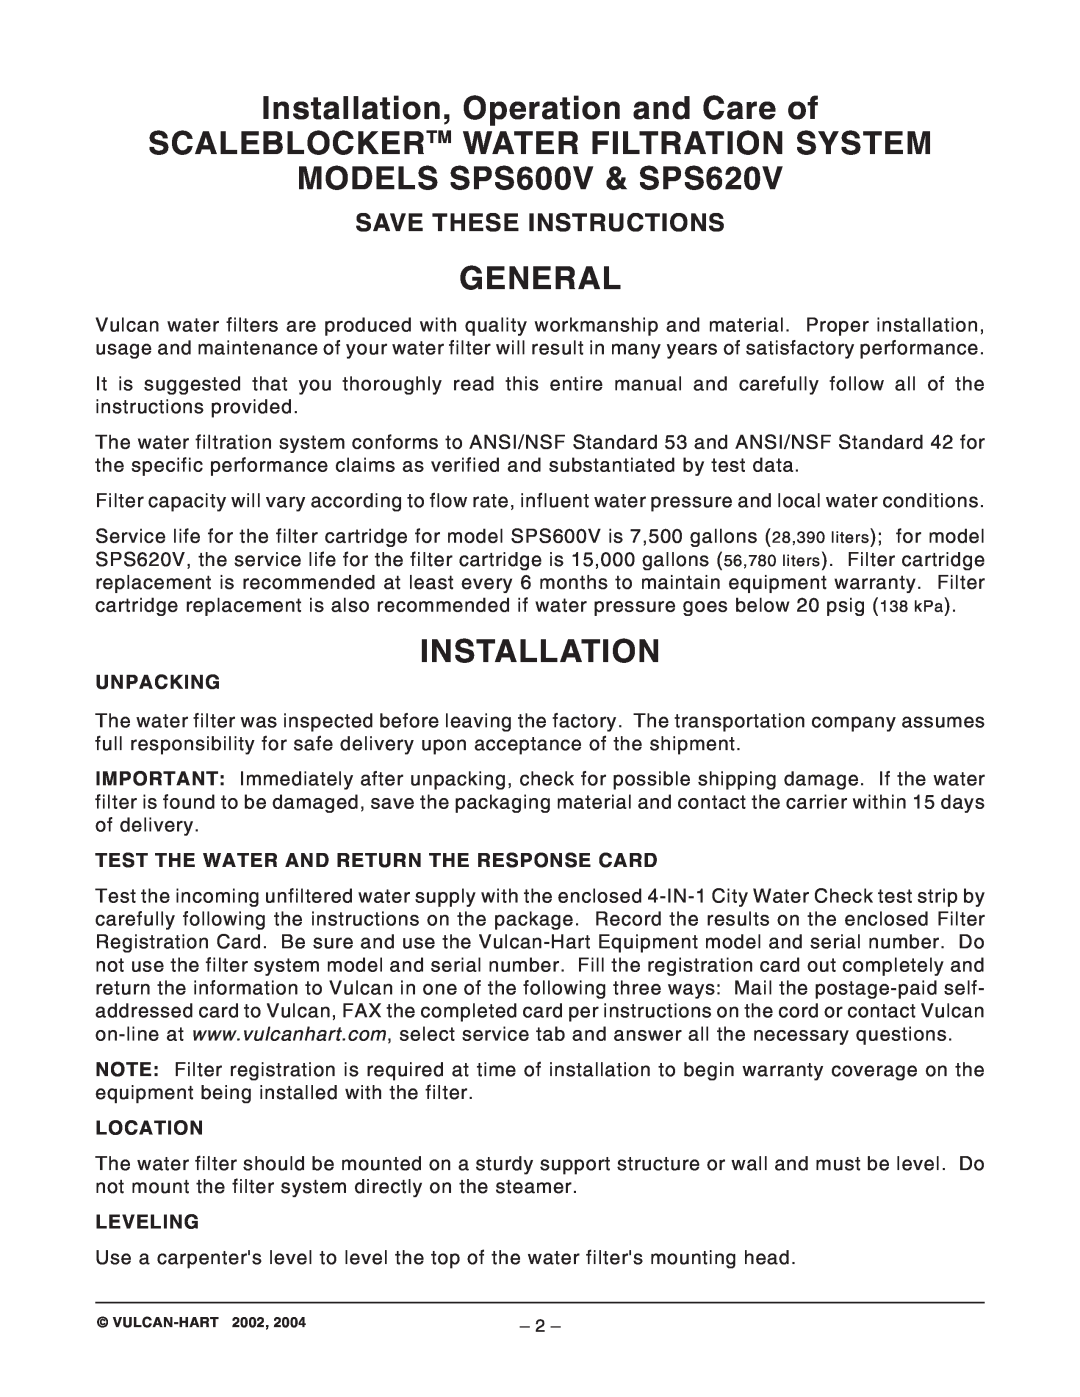 Vulcan-Hart Installation, Operation and Care of, Scaleblockertm Water Filtration System, MODELS SPS600V & SPS620V 